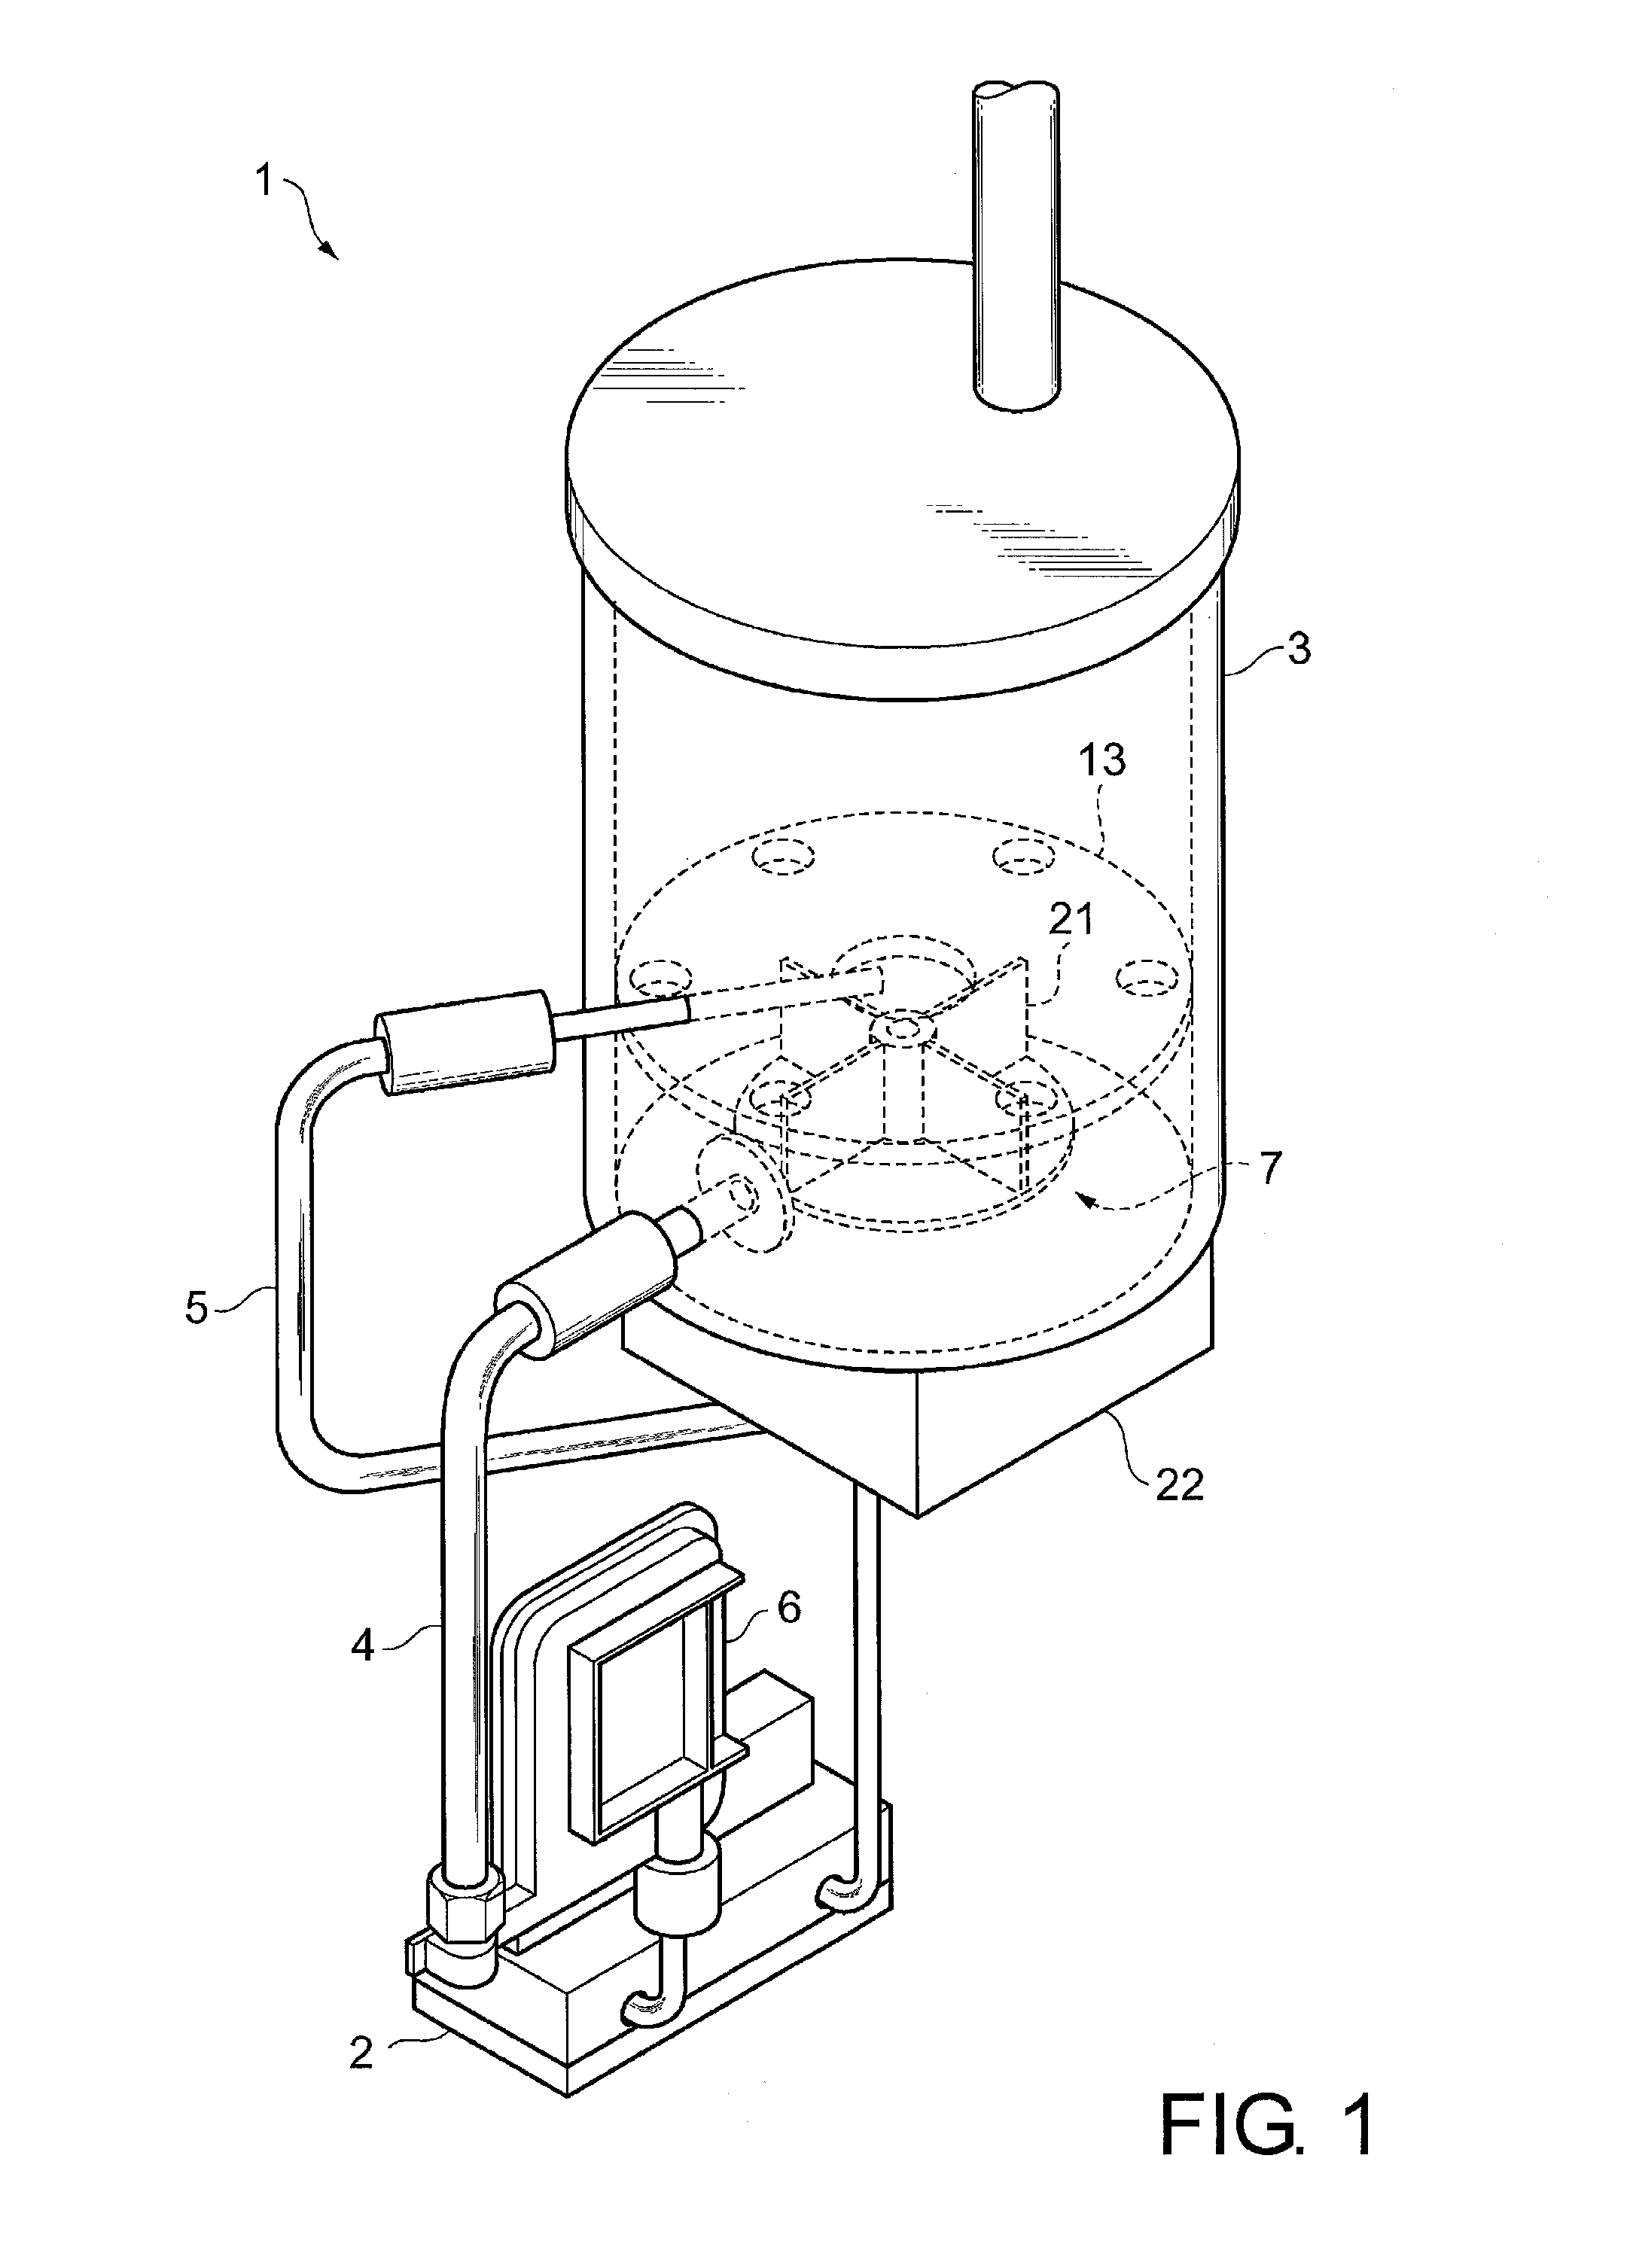 Liquid circulation system and ink-jet printer